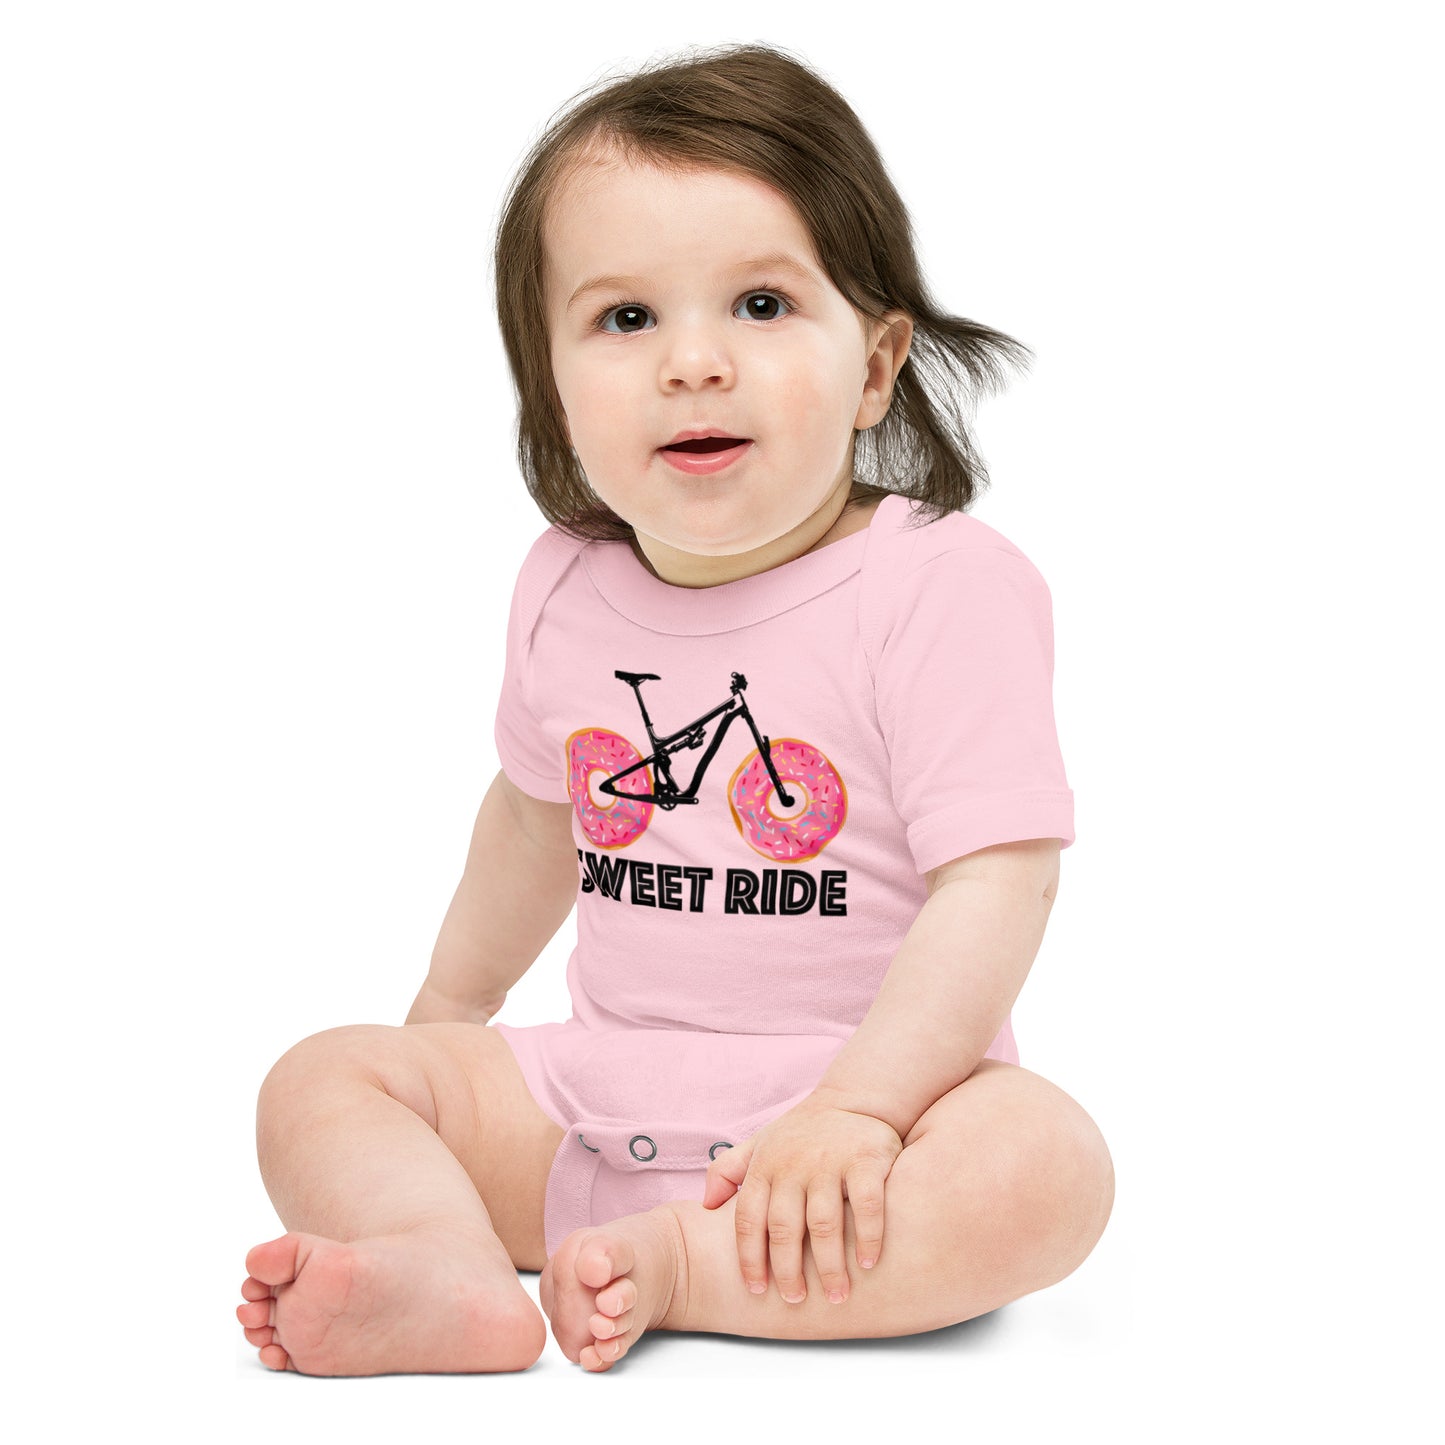 Sweet MTB Ride - Baby short sleeve one piece